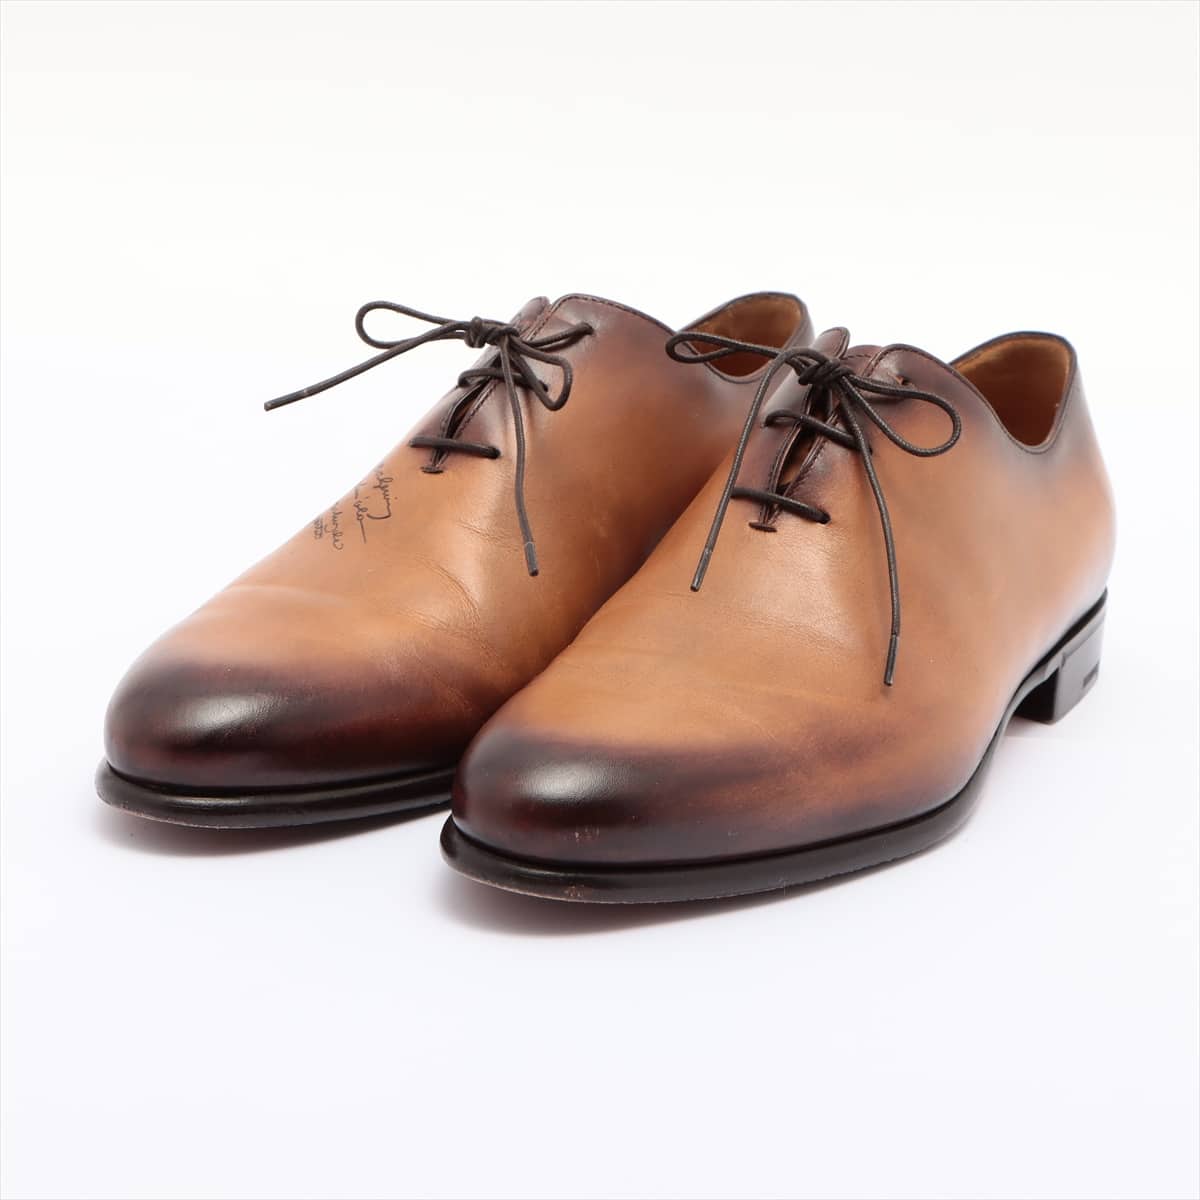 Berluti Alessandro Calfskin Leather shoes 7 Men's Beige Oxford